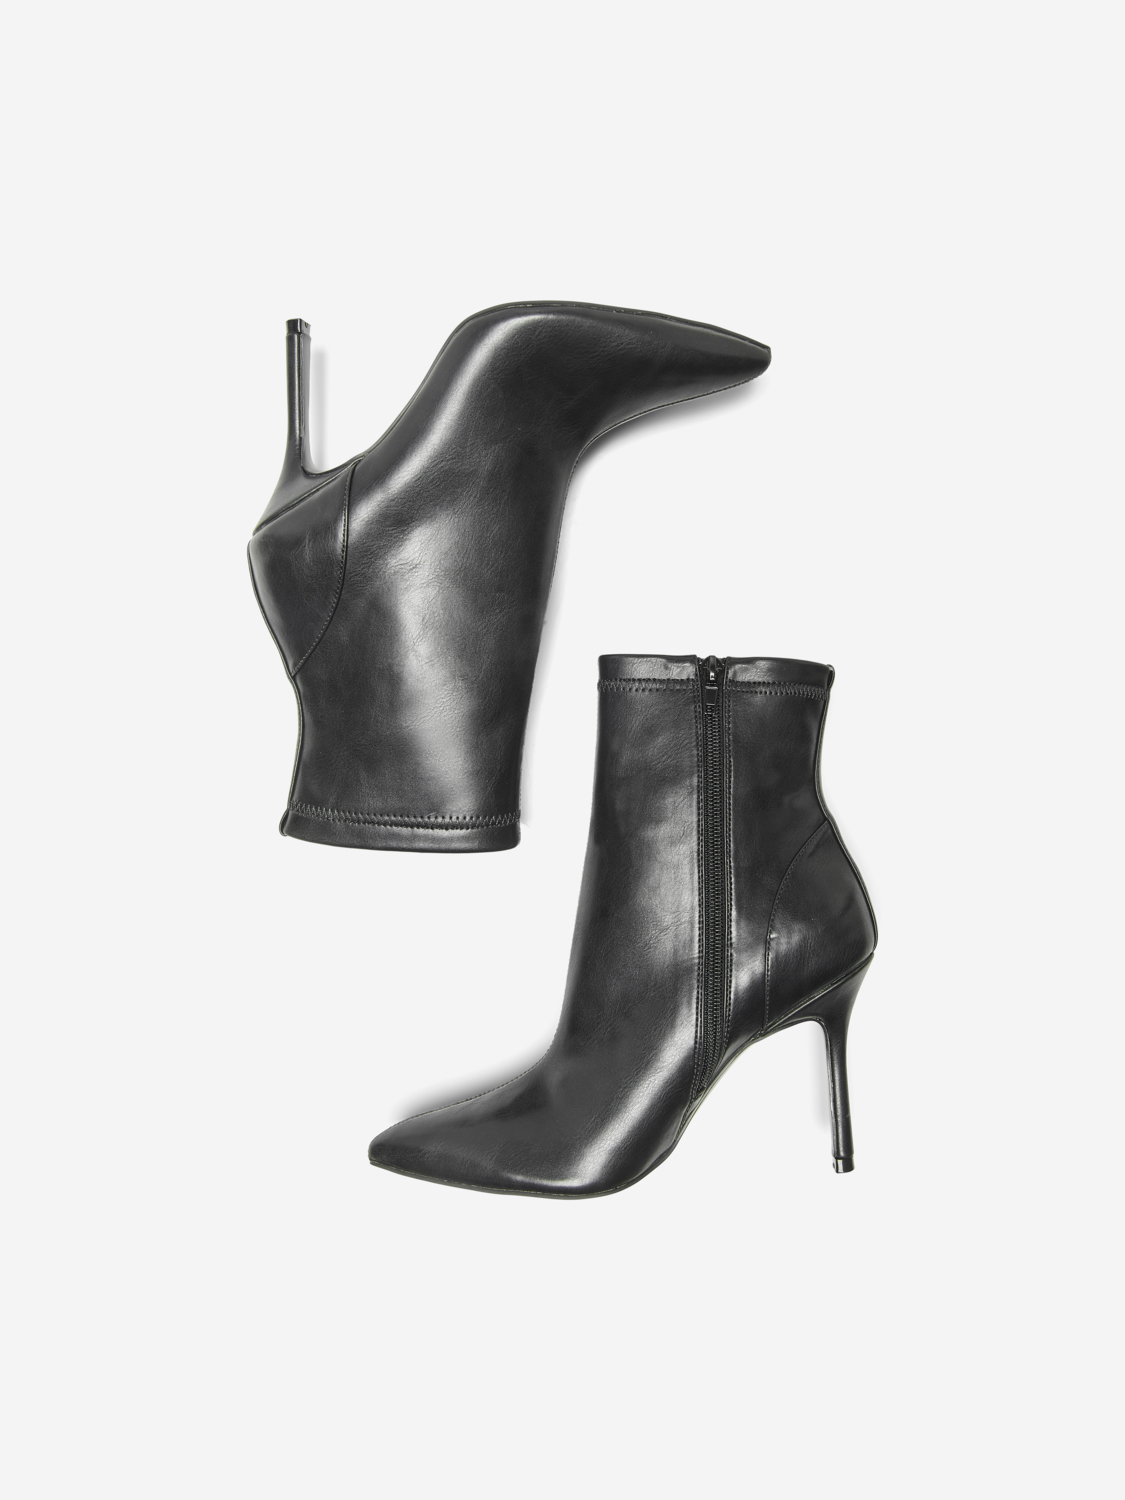 Cali stiletto heel ankle boots, BLACK, large